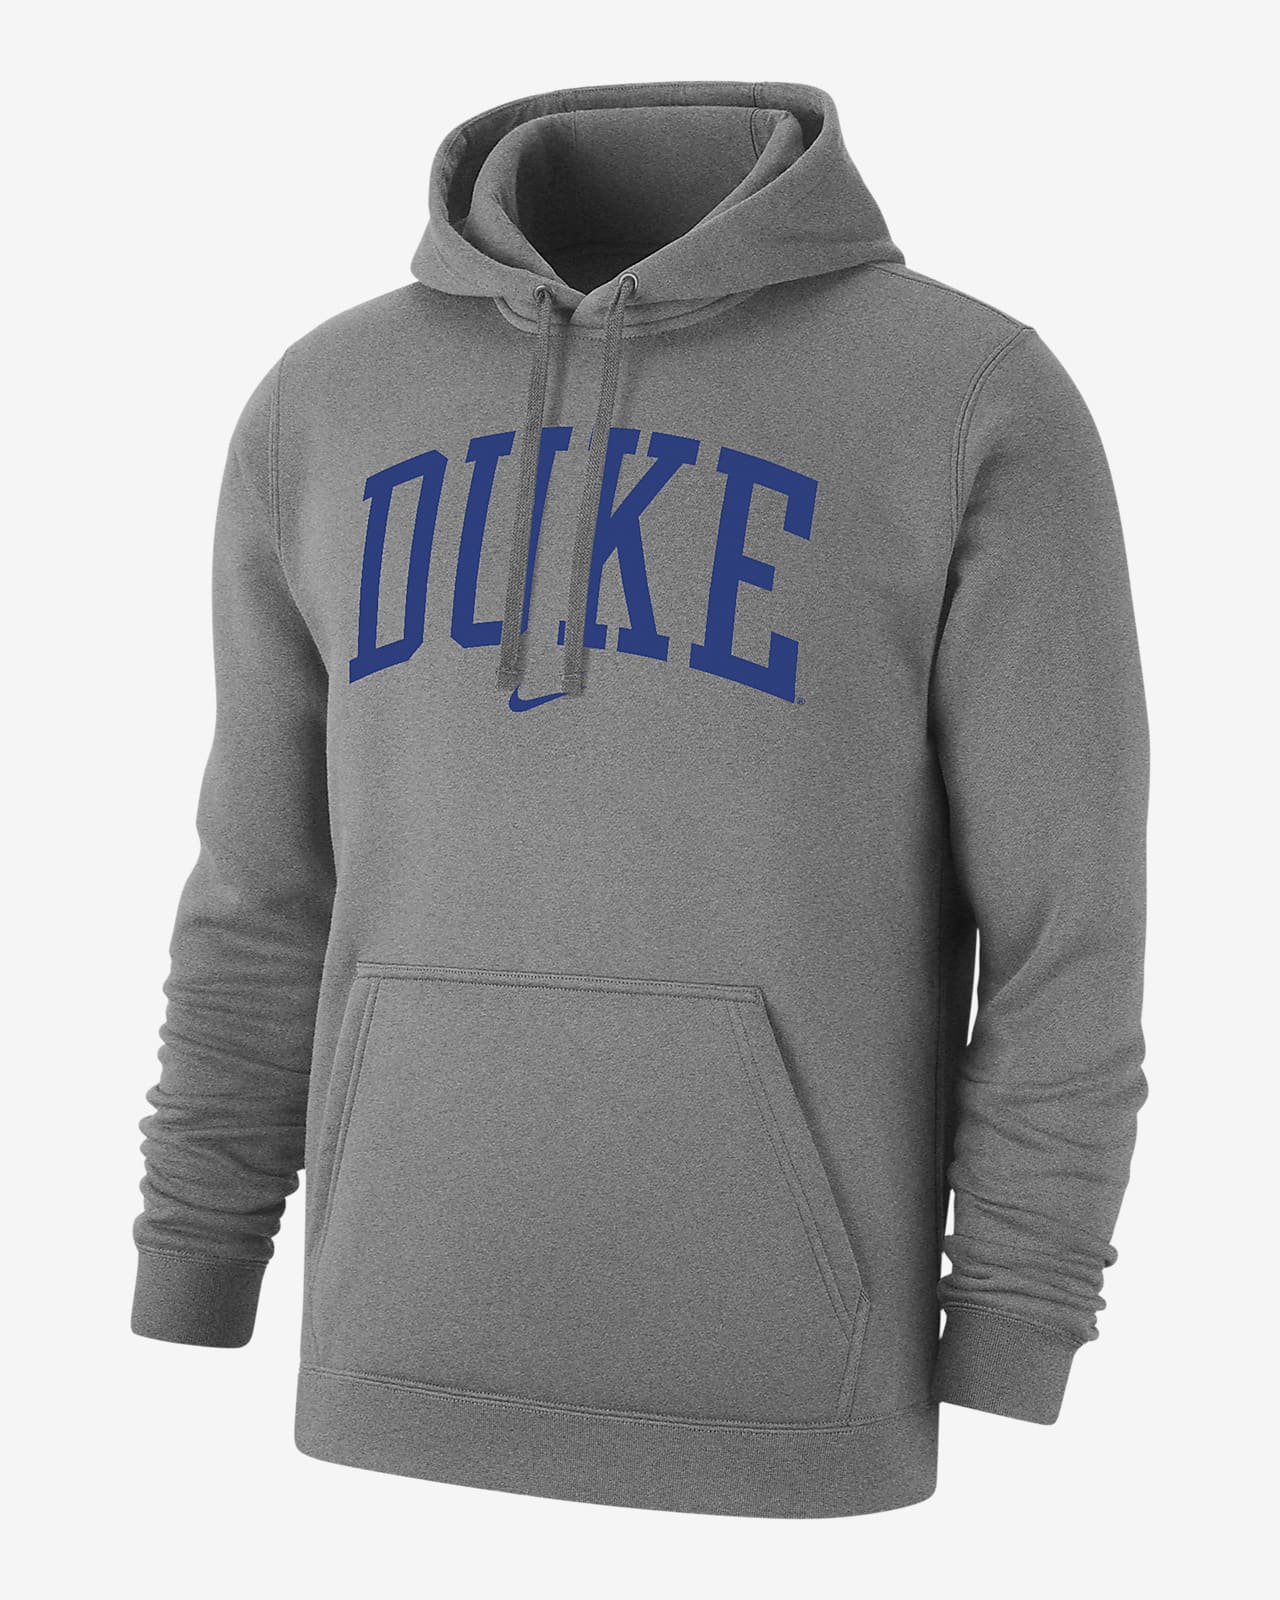 Duke Club Fleece Men's Nike College Pullover Hoodie